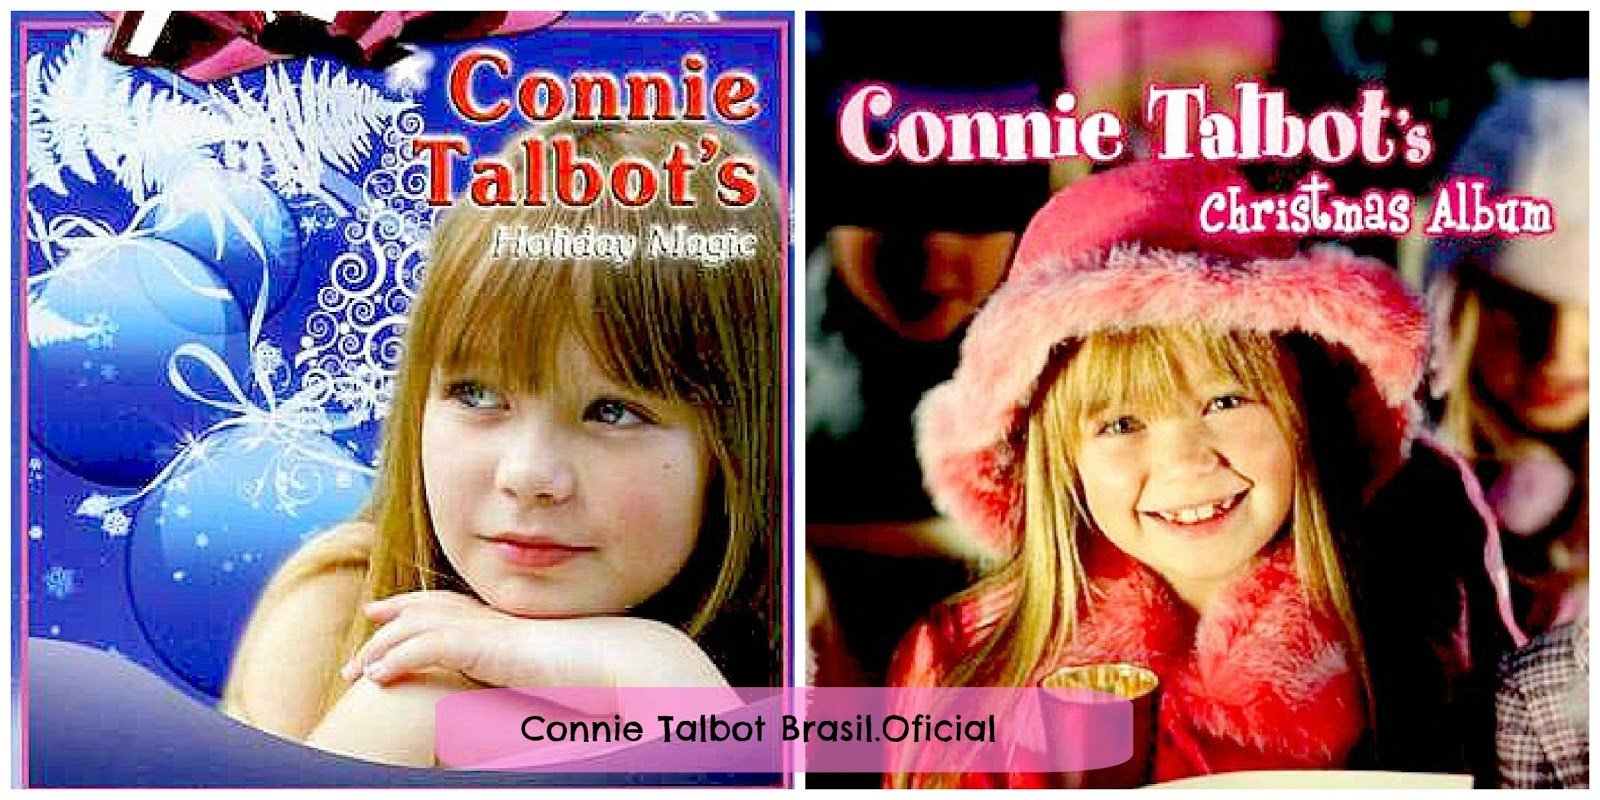 Connie Talbot - Wikipedia